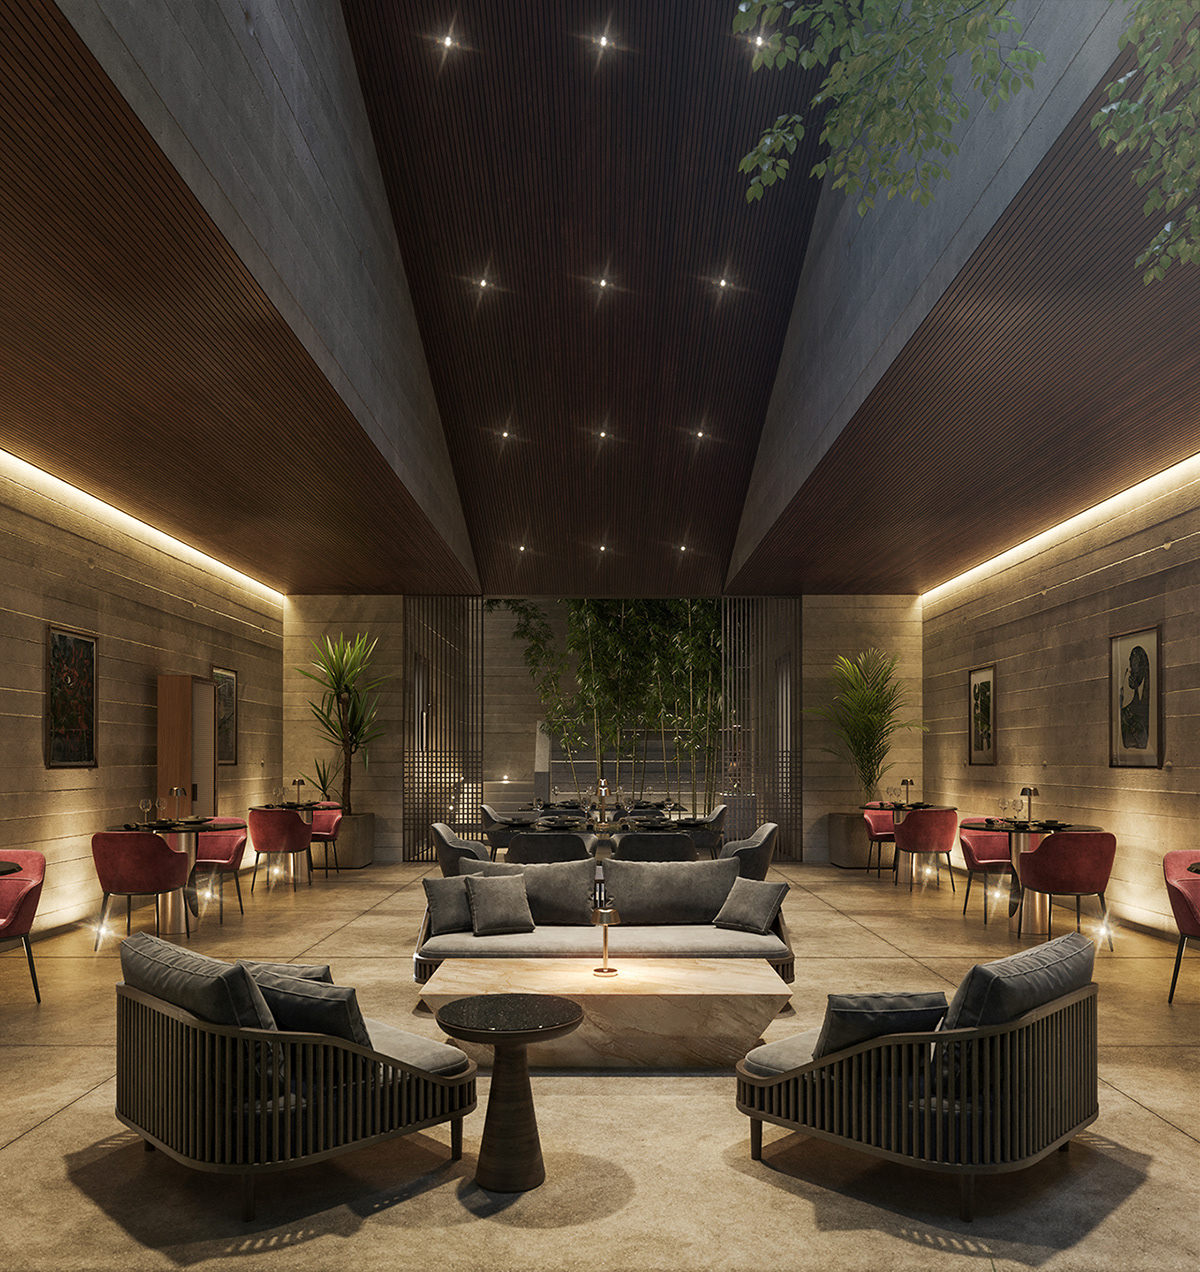 3D 3dsmax architecture CG cg art cgartist corona render  indoor Render visualization